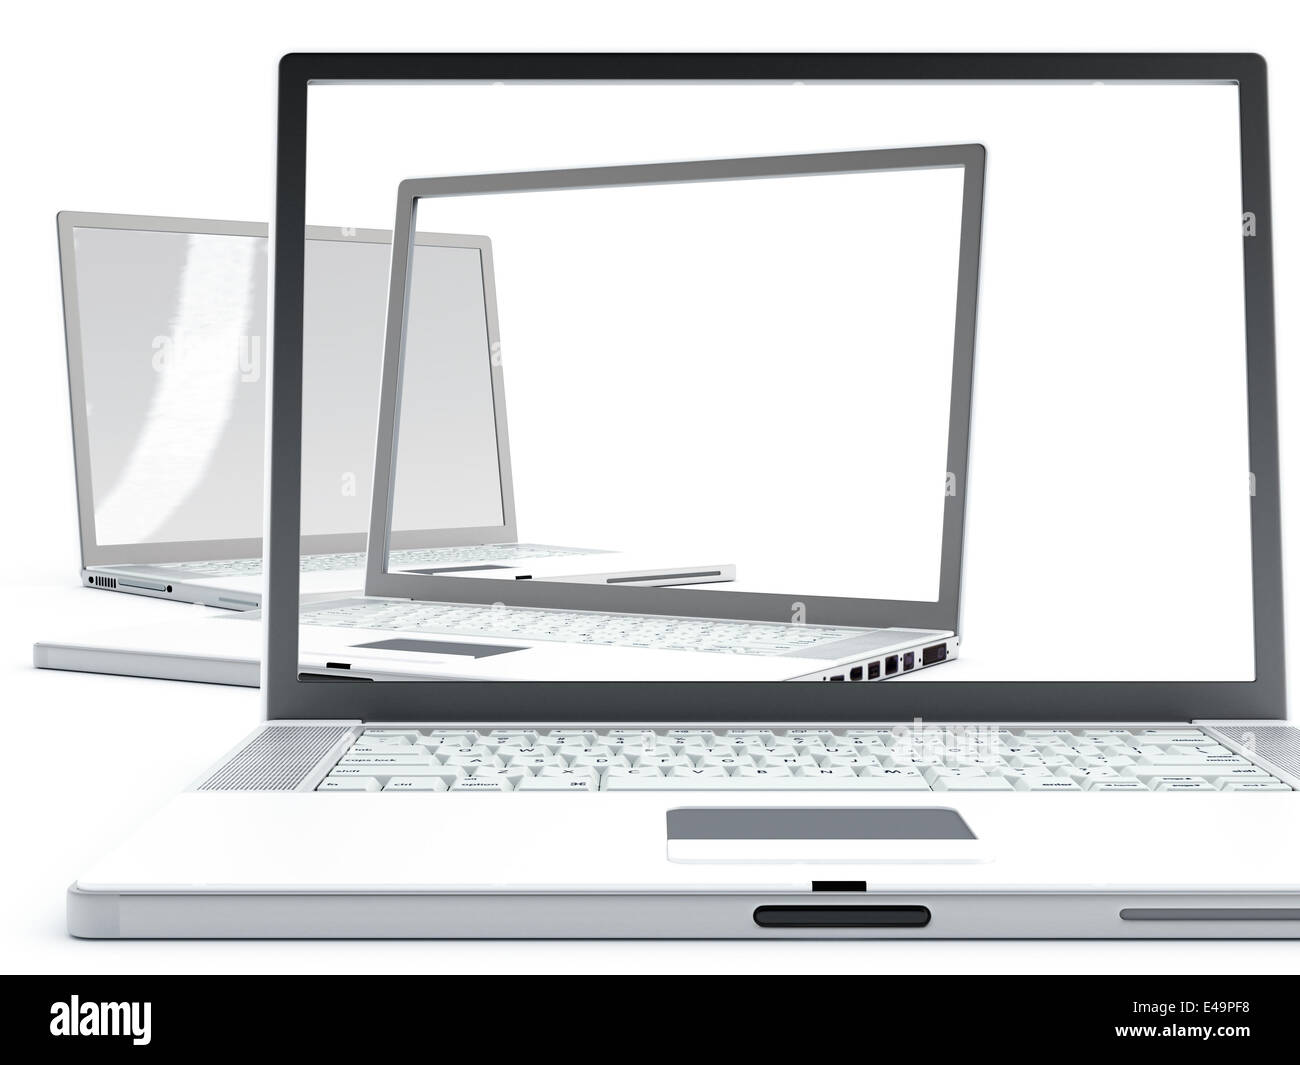 Los ordenadores portátiles modernos con pantallas transparentes Foto de stock